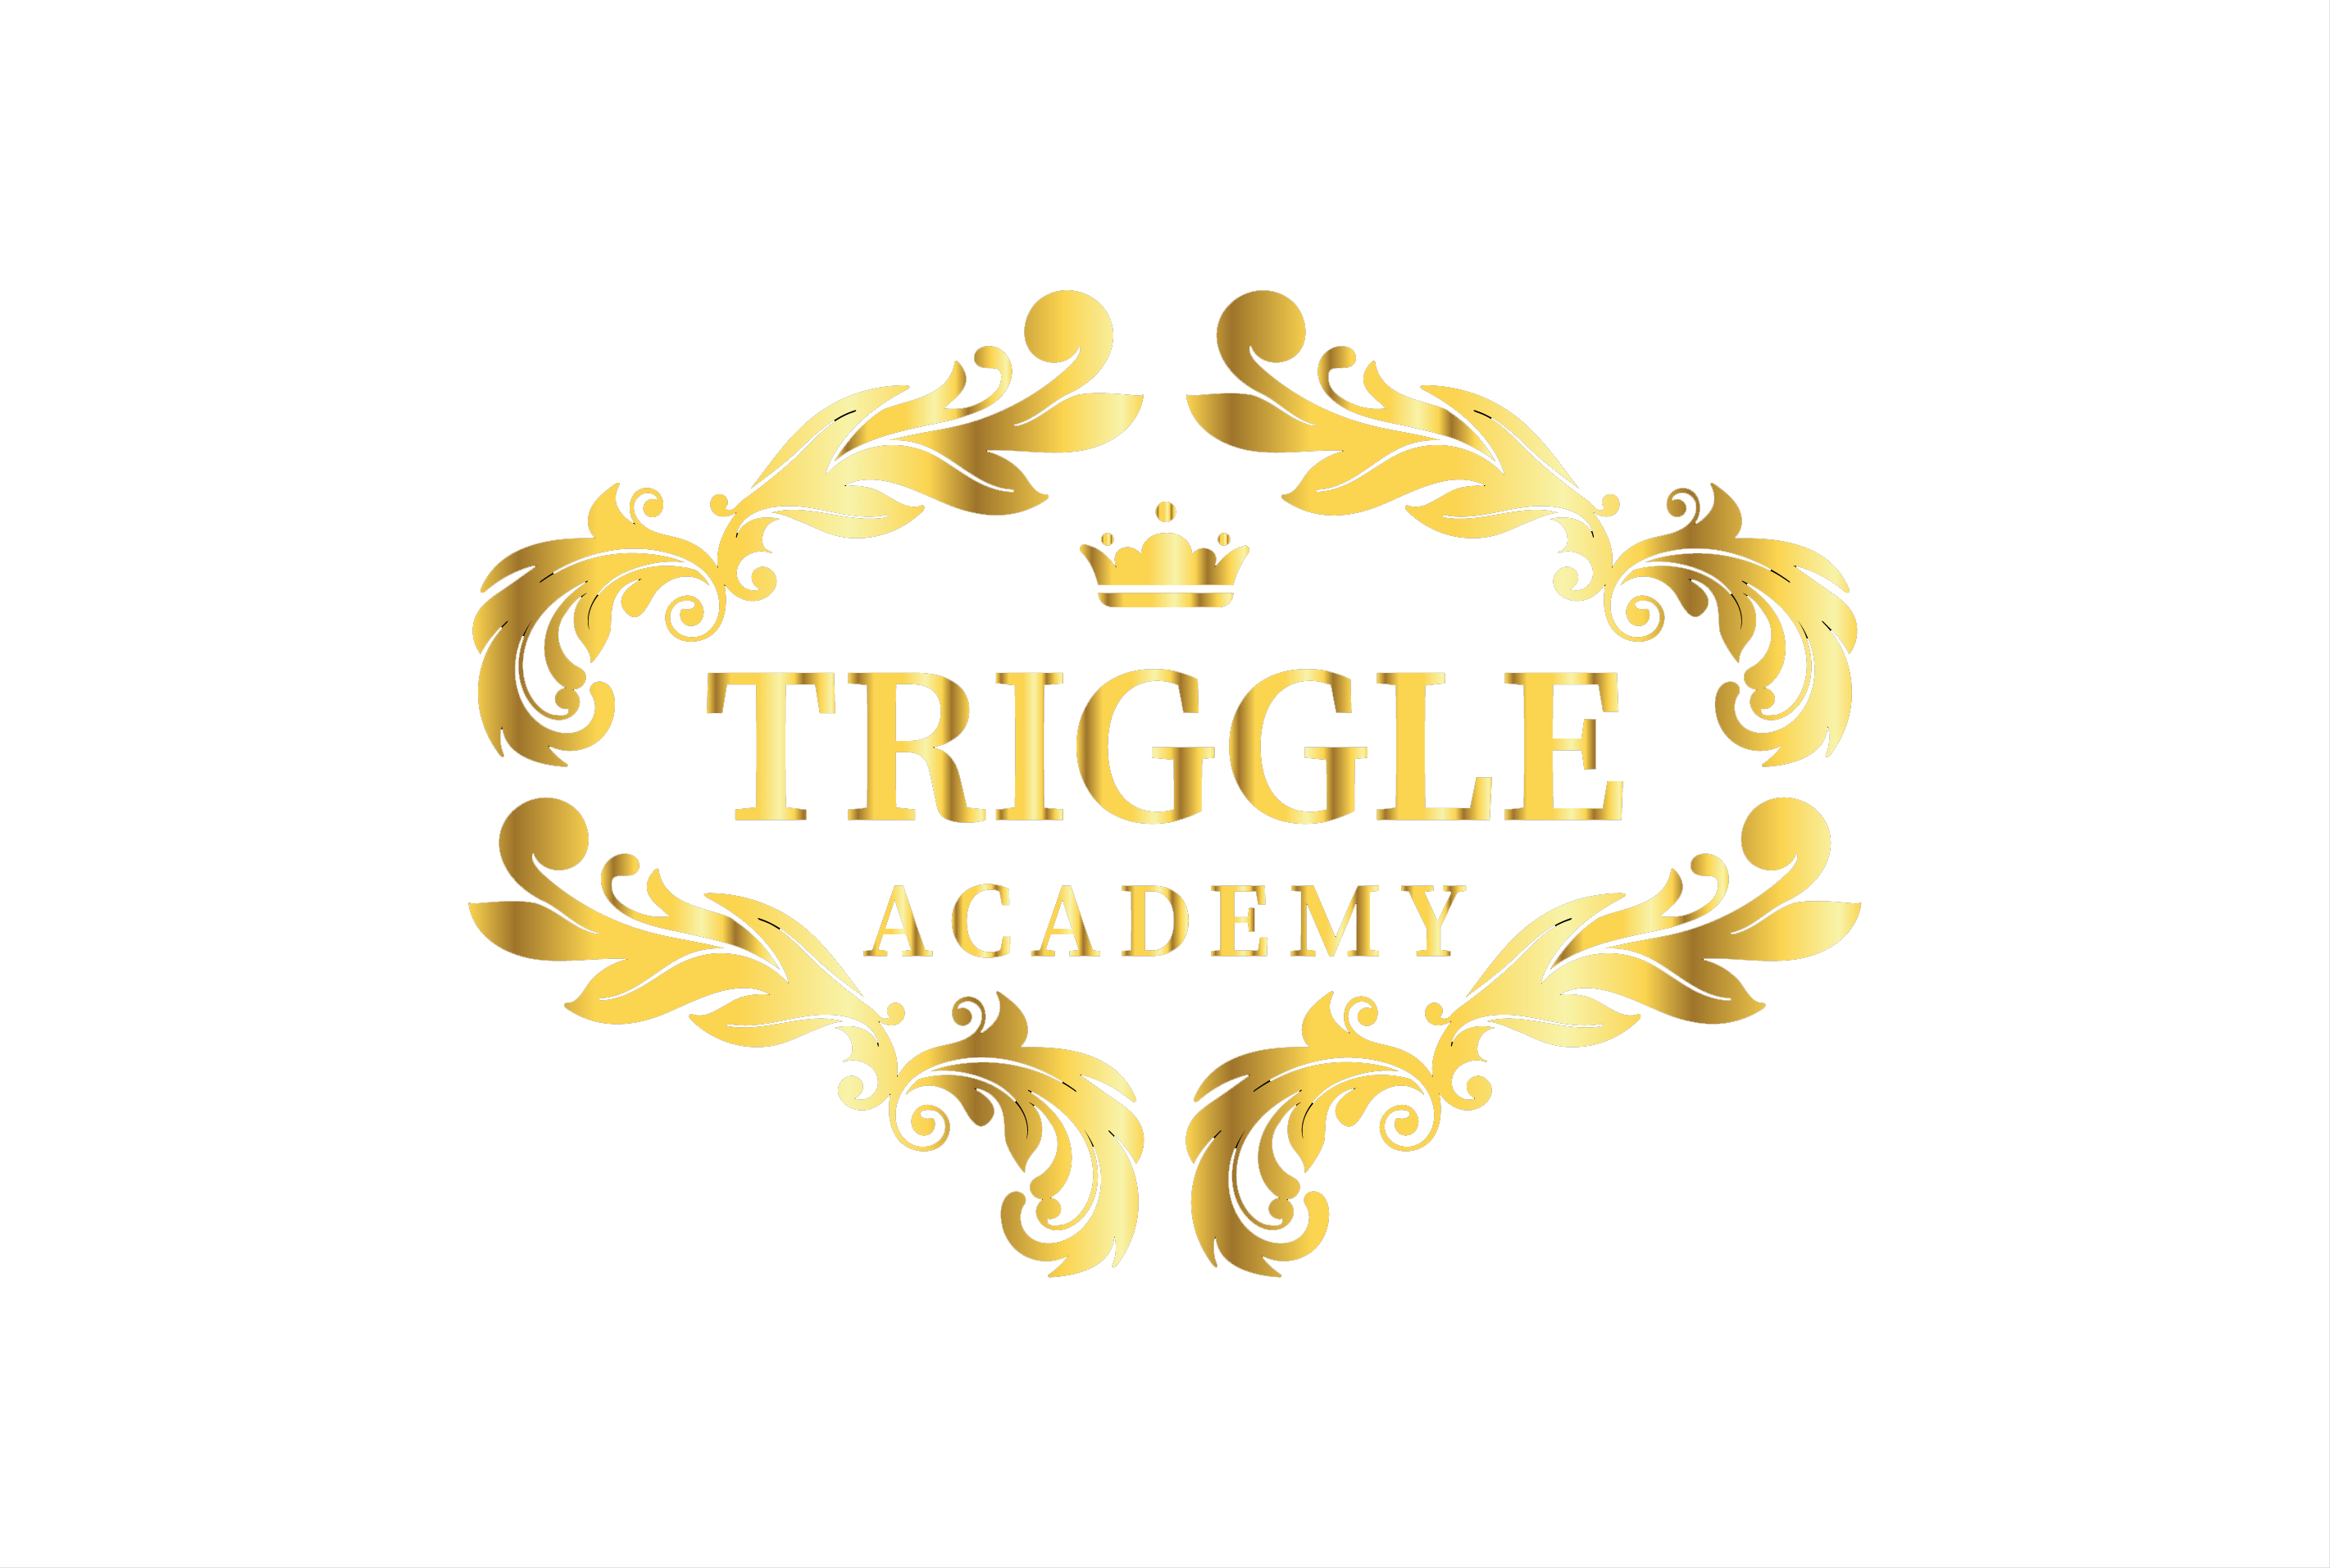 Triggle Academy of Irish Dance – Triggle Academy